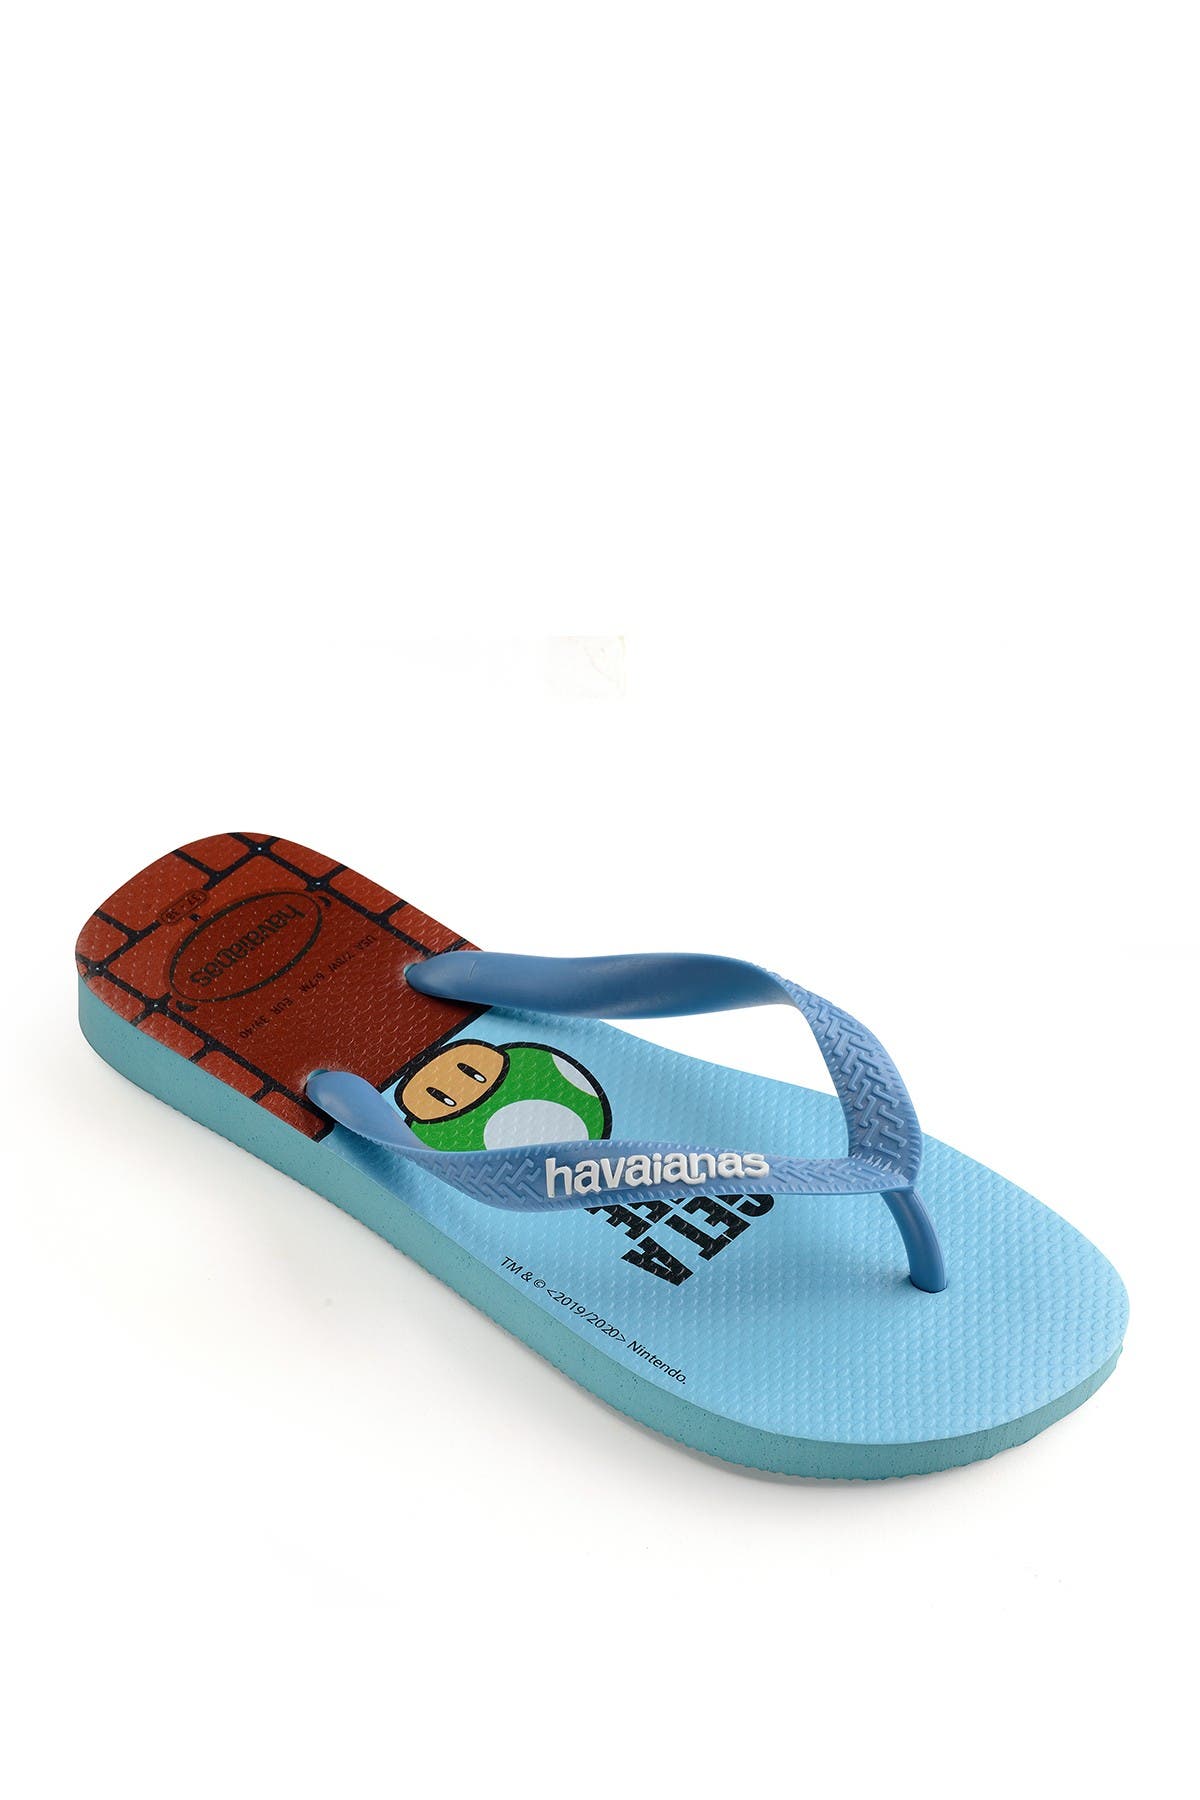 Havaianas Mario Bros Flip Flop Sandal In Blue/blue Steel | ModeSens